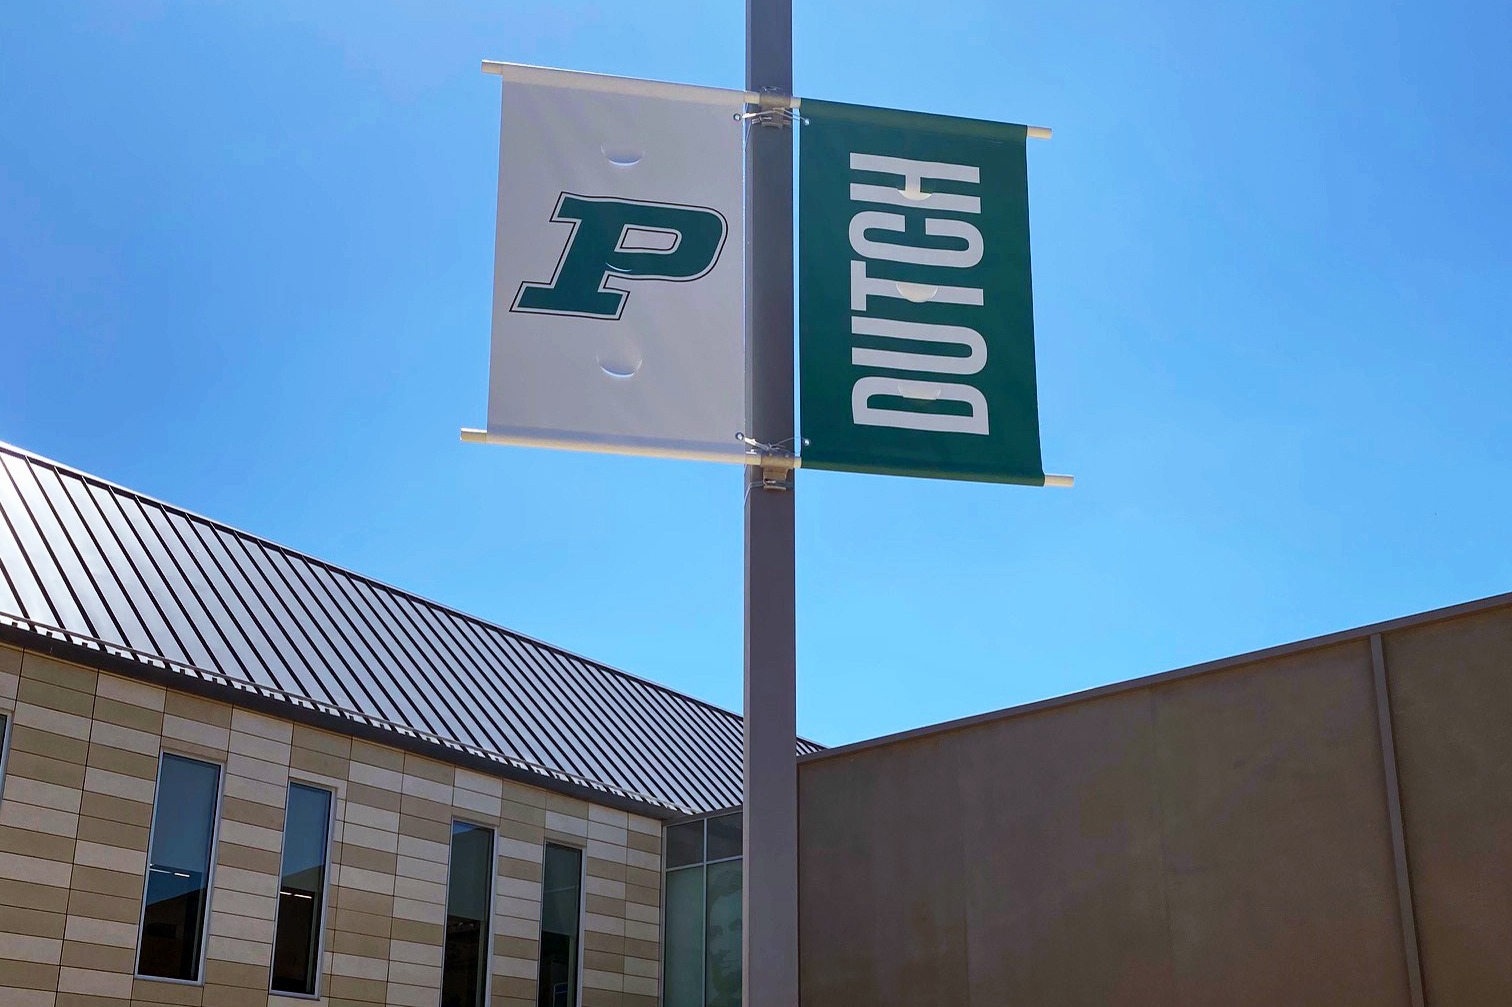 Two Pella Dutch banners on lampposts in school parking lot